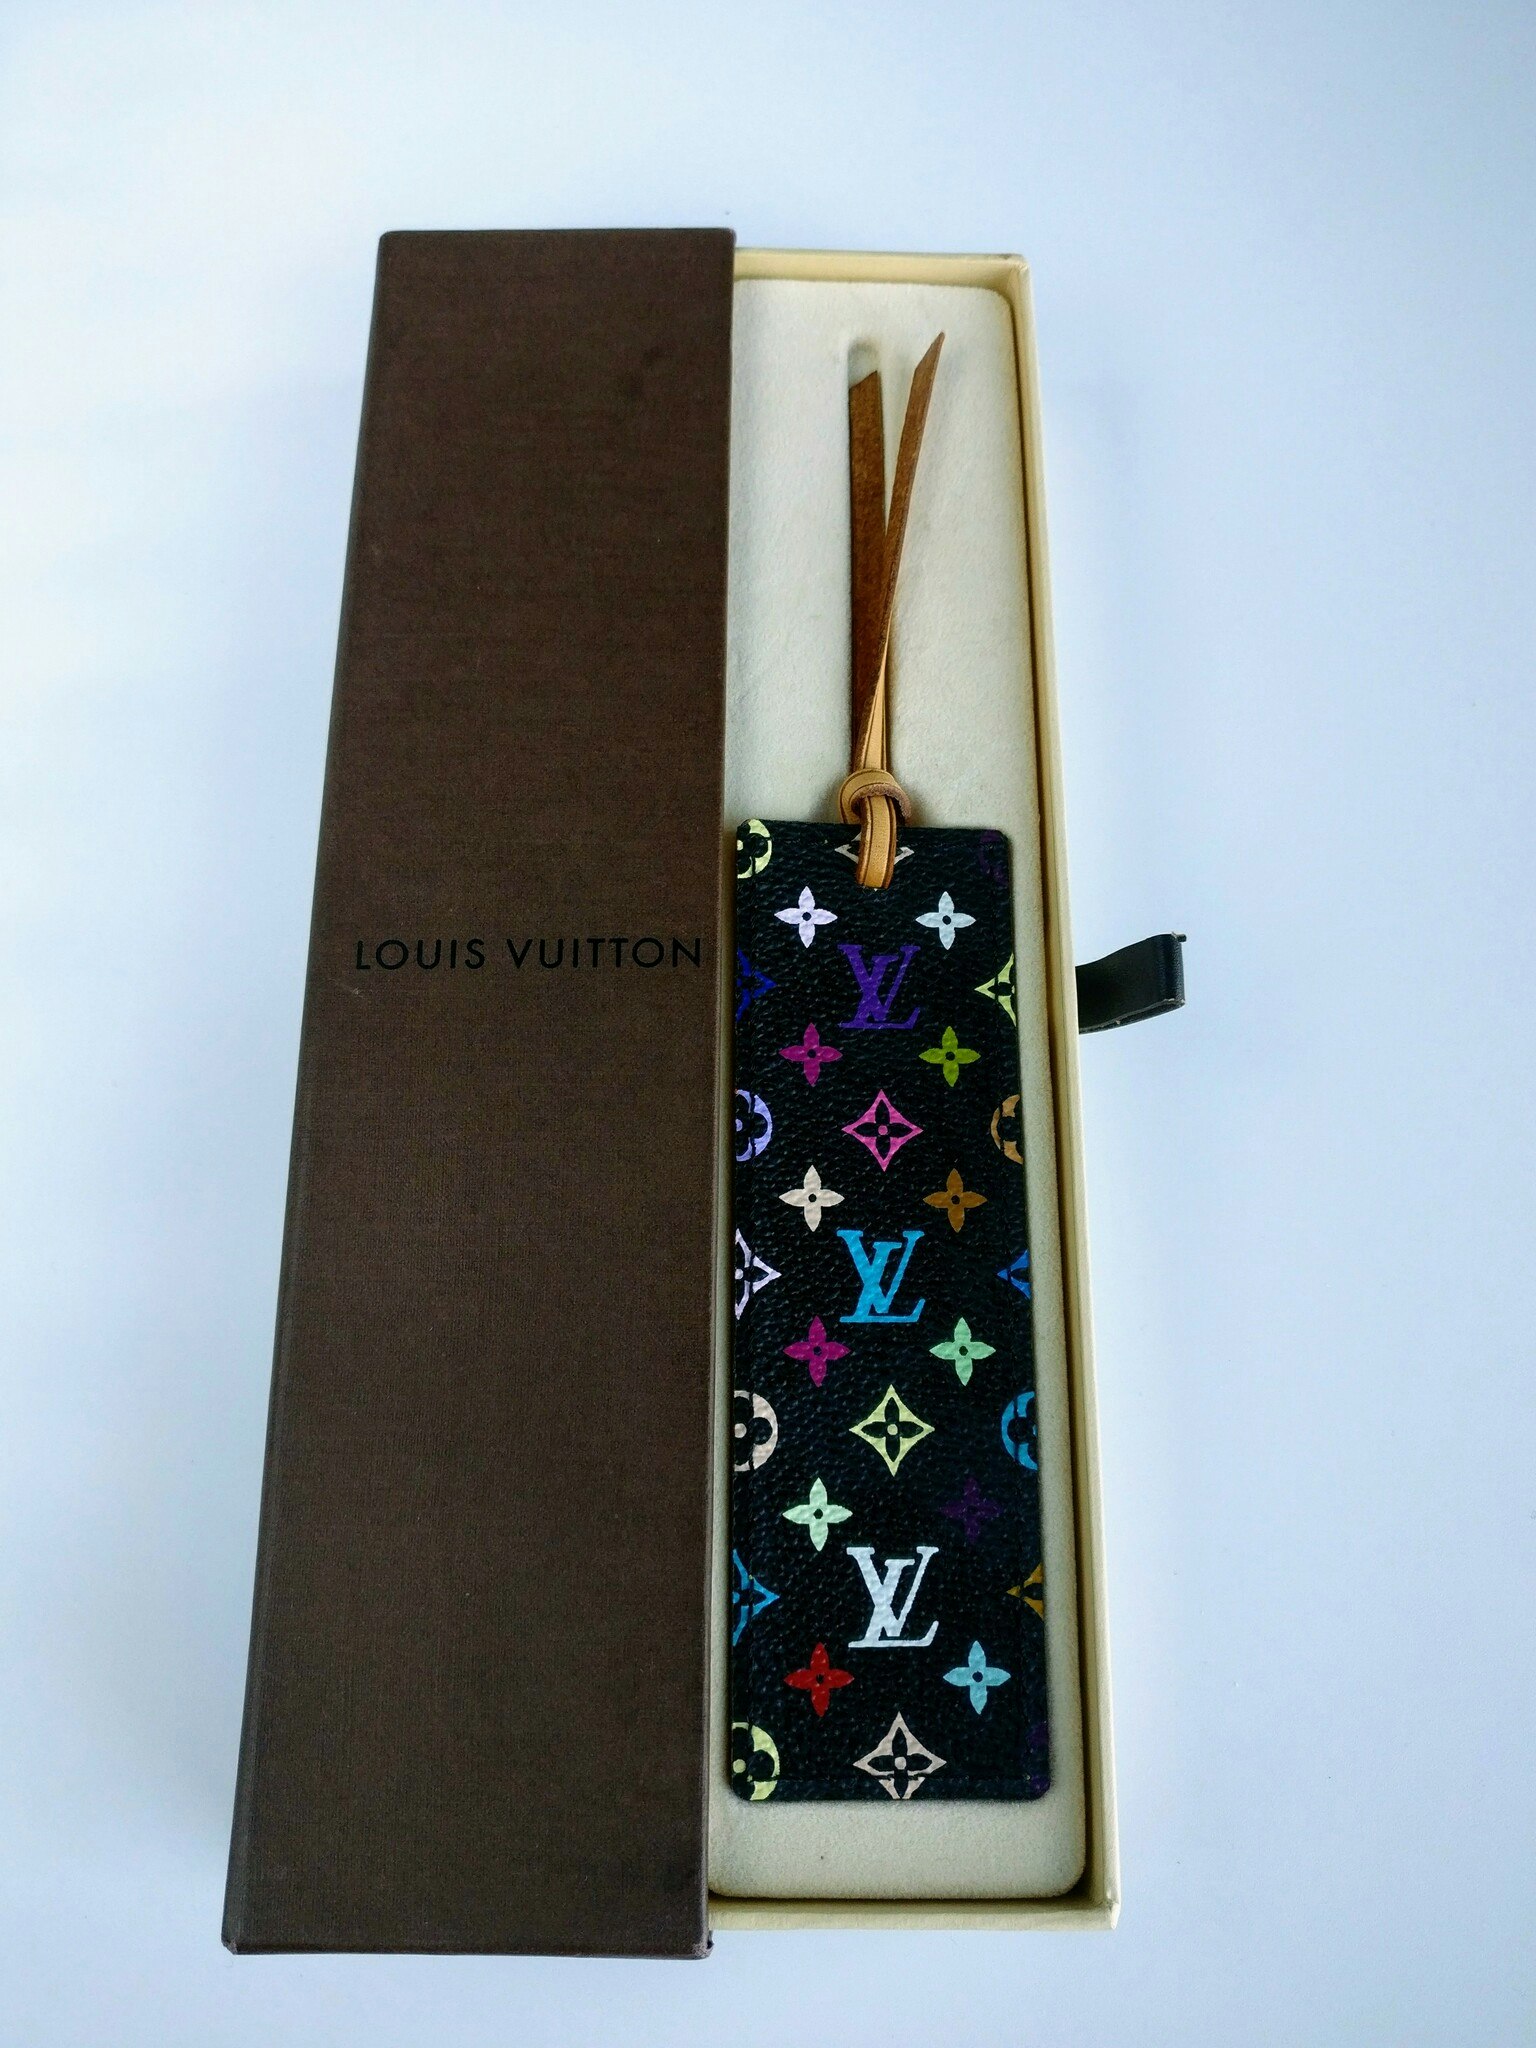 Bag charm Louis Vuitton Multicolour in Other - 34542137